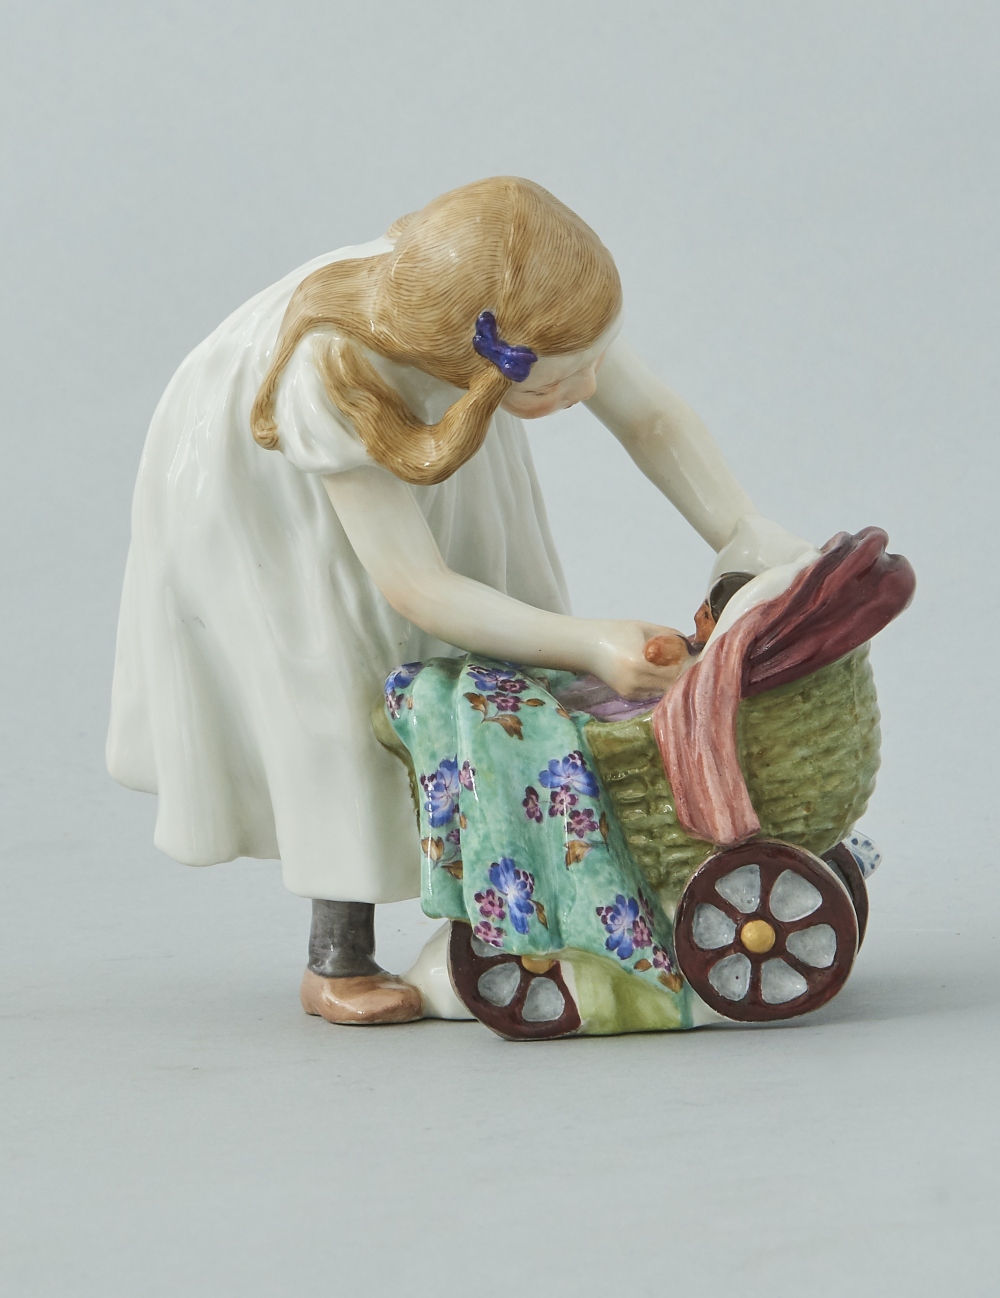 Kind mit Puppenwagen - Image 2 of 3